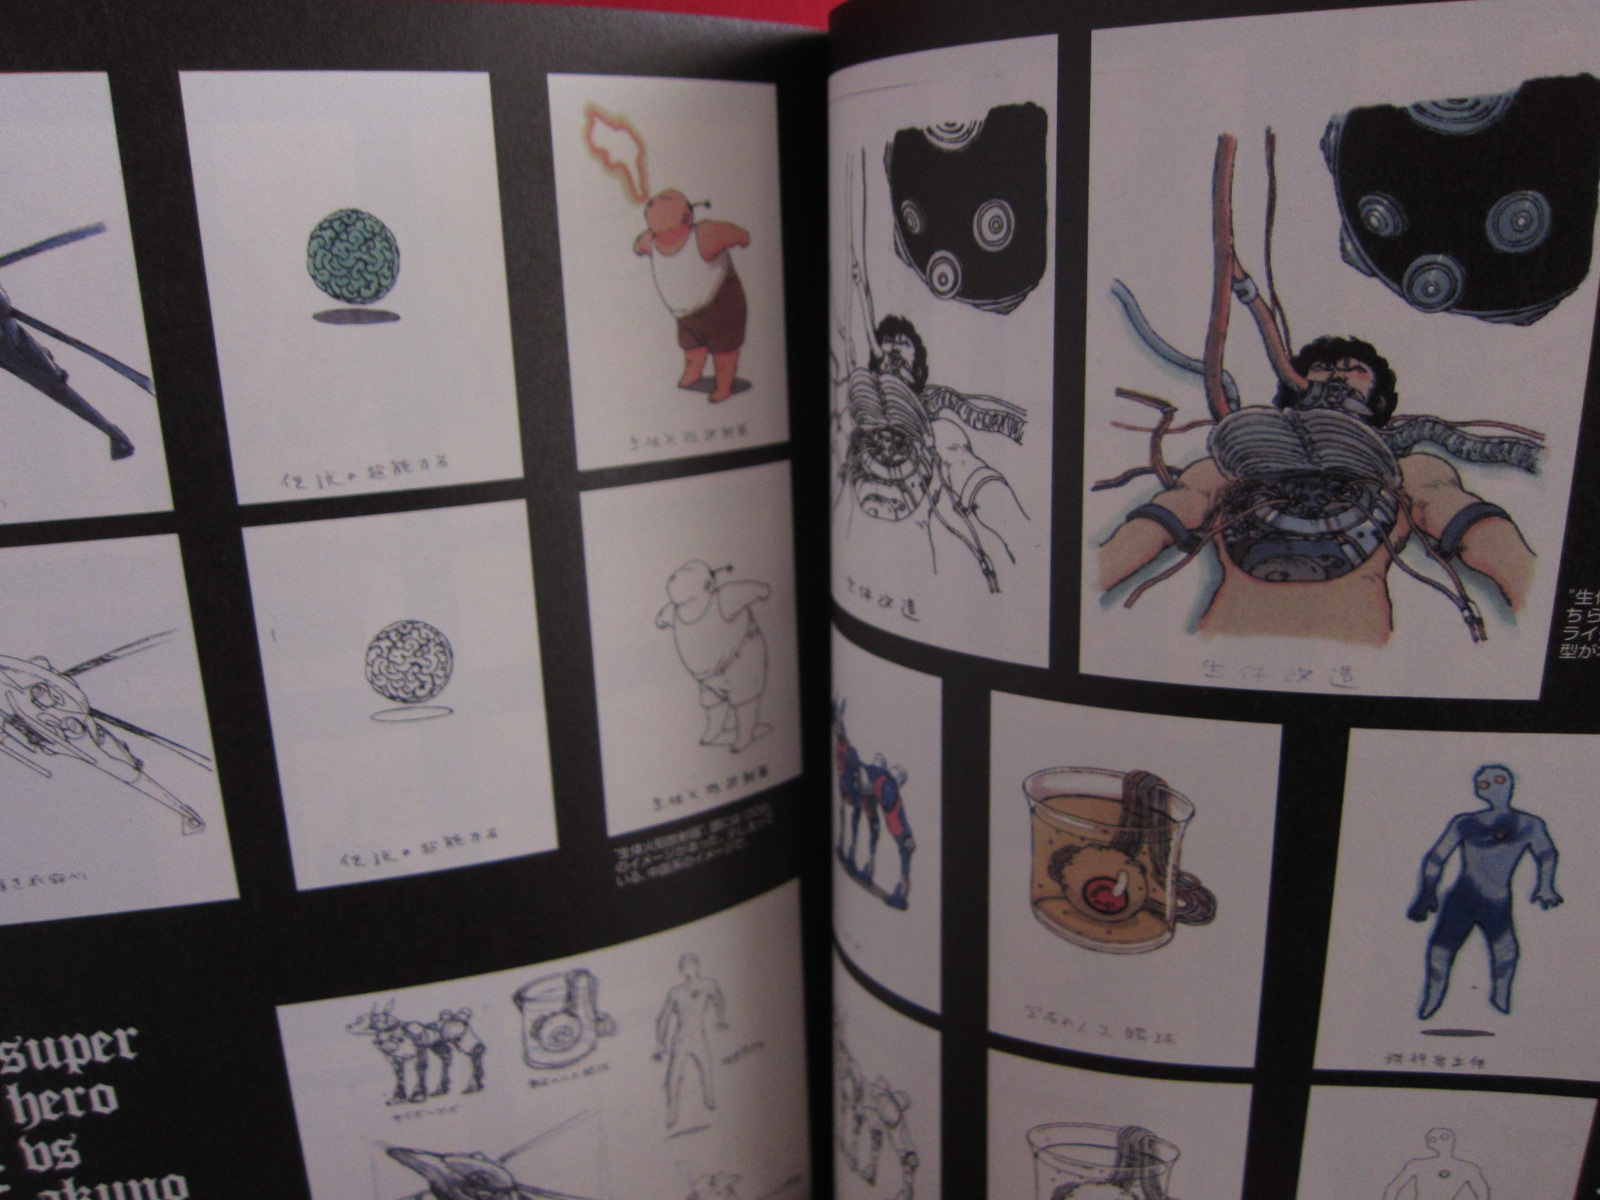 JAPAN Kamui Fujiwara Works 40GB Side.A Art Book